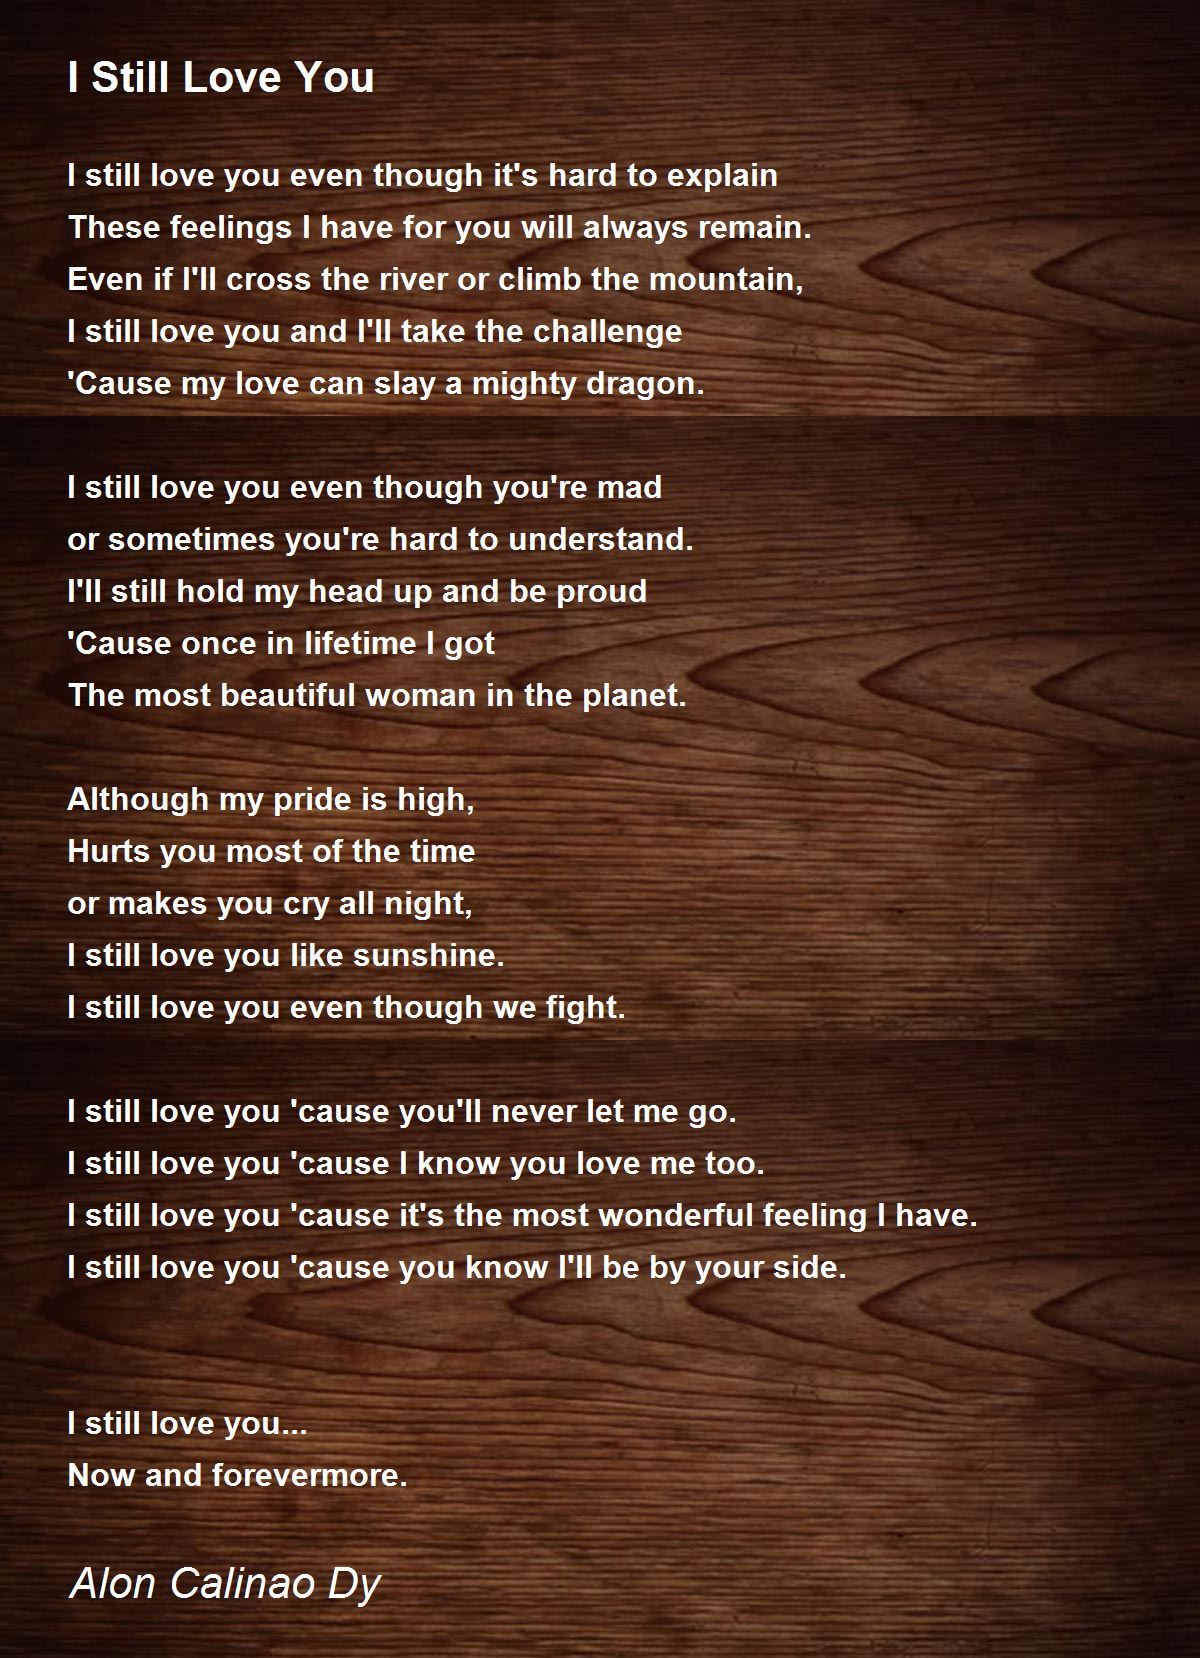 True Love - True Love Poem by Alon Calinao Dy